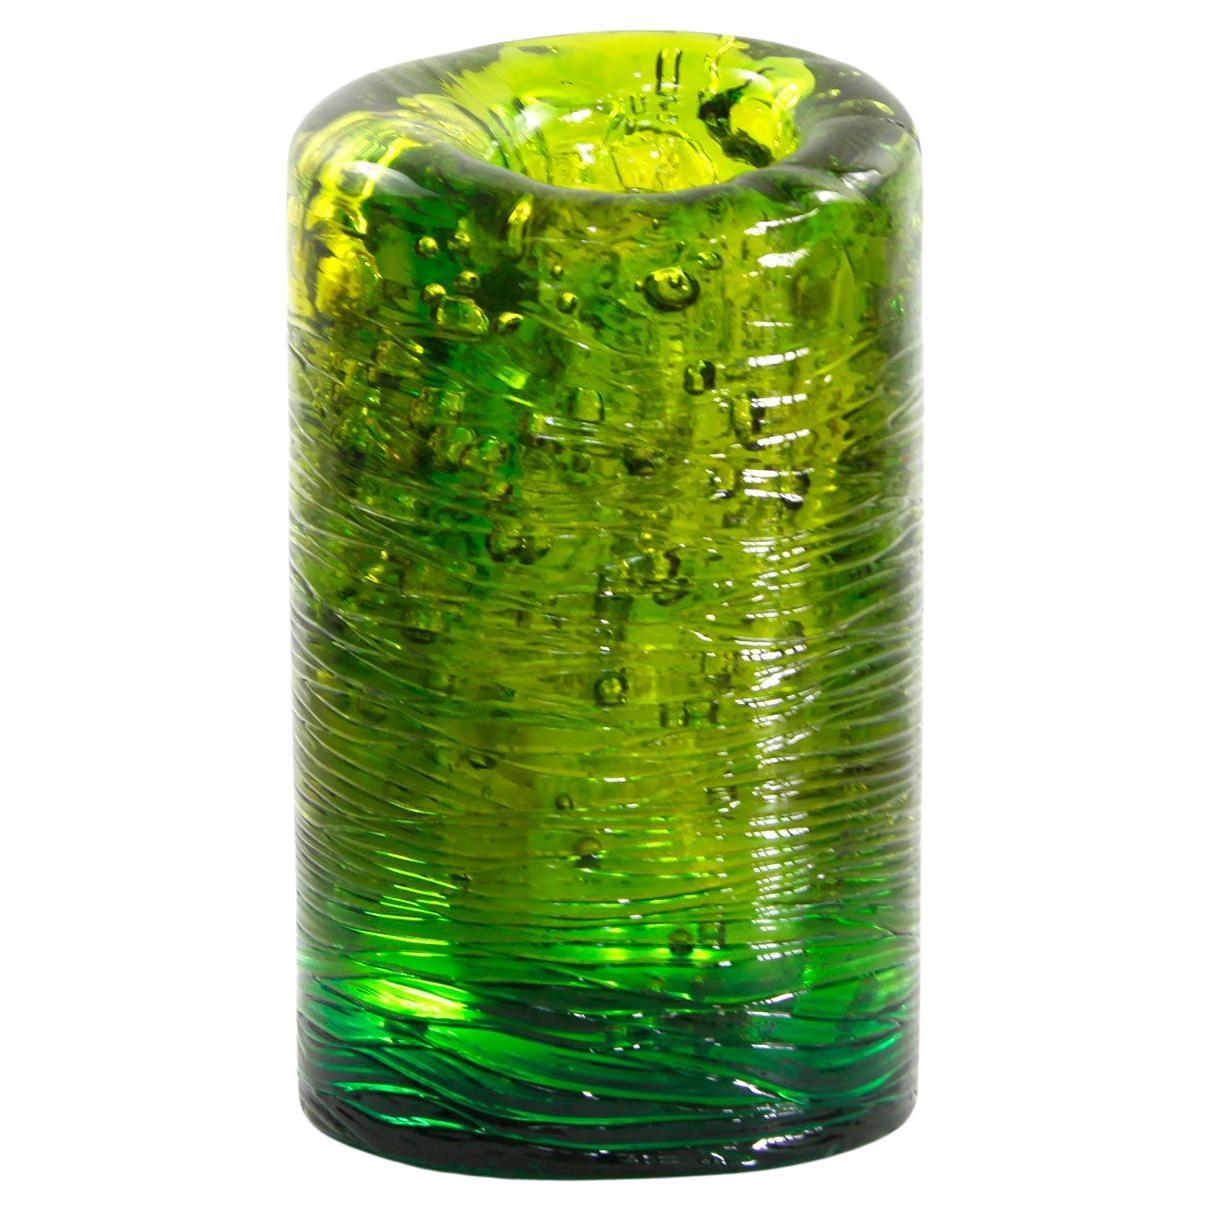 Jungle Contemporary Vase, Large, in Monochrome Lime Green by Jacopo Foggini For Sale